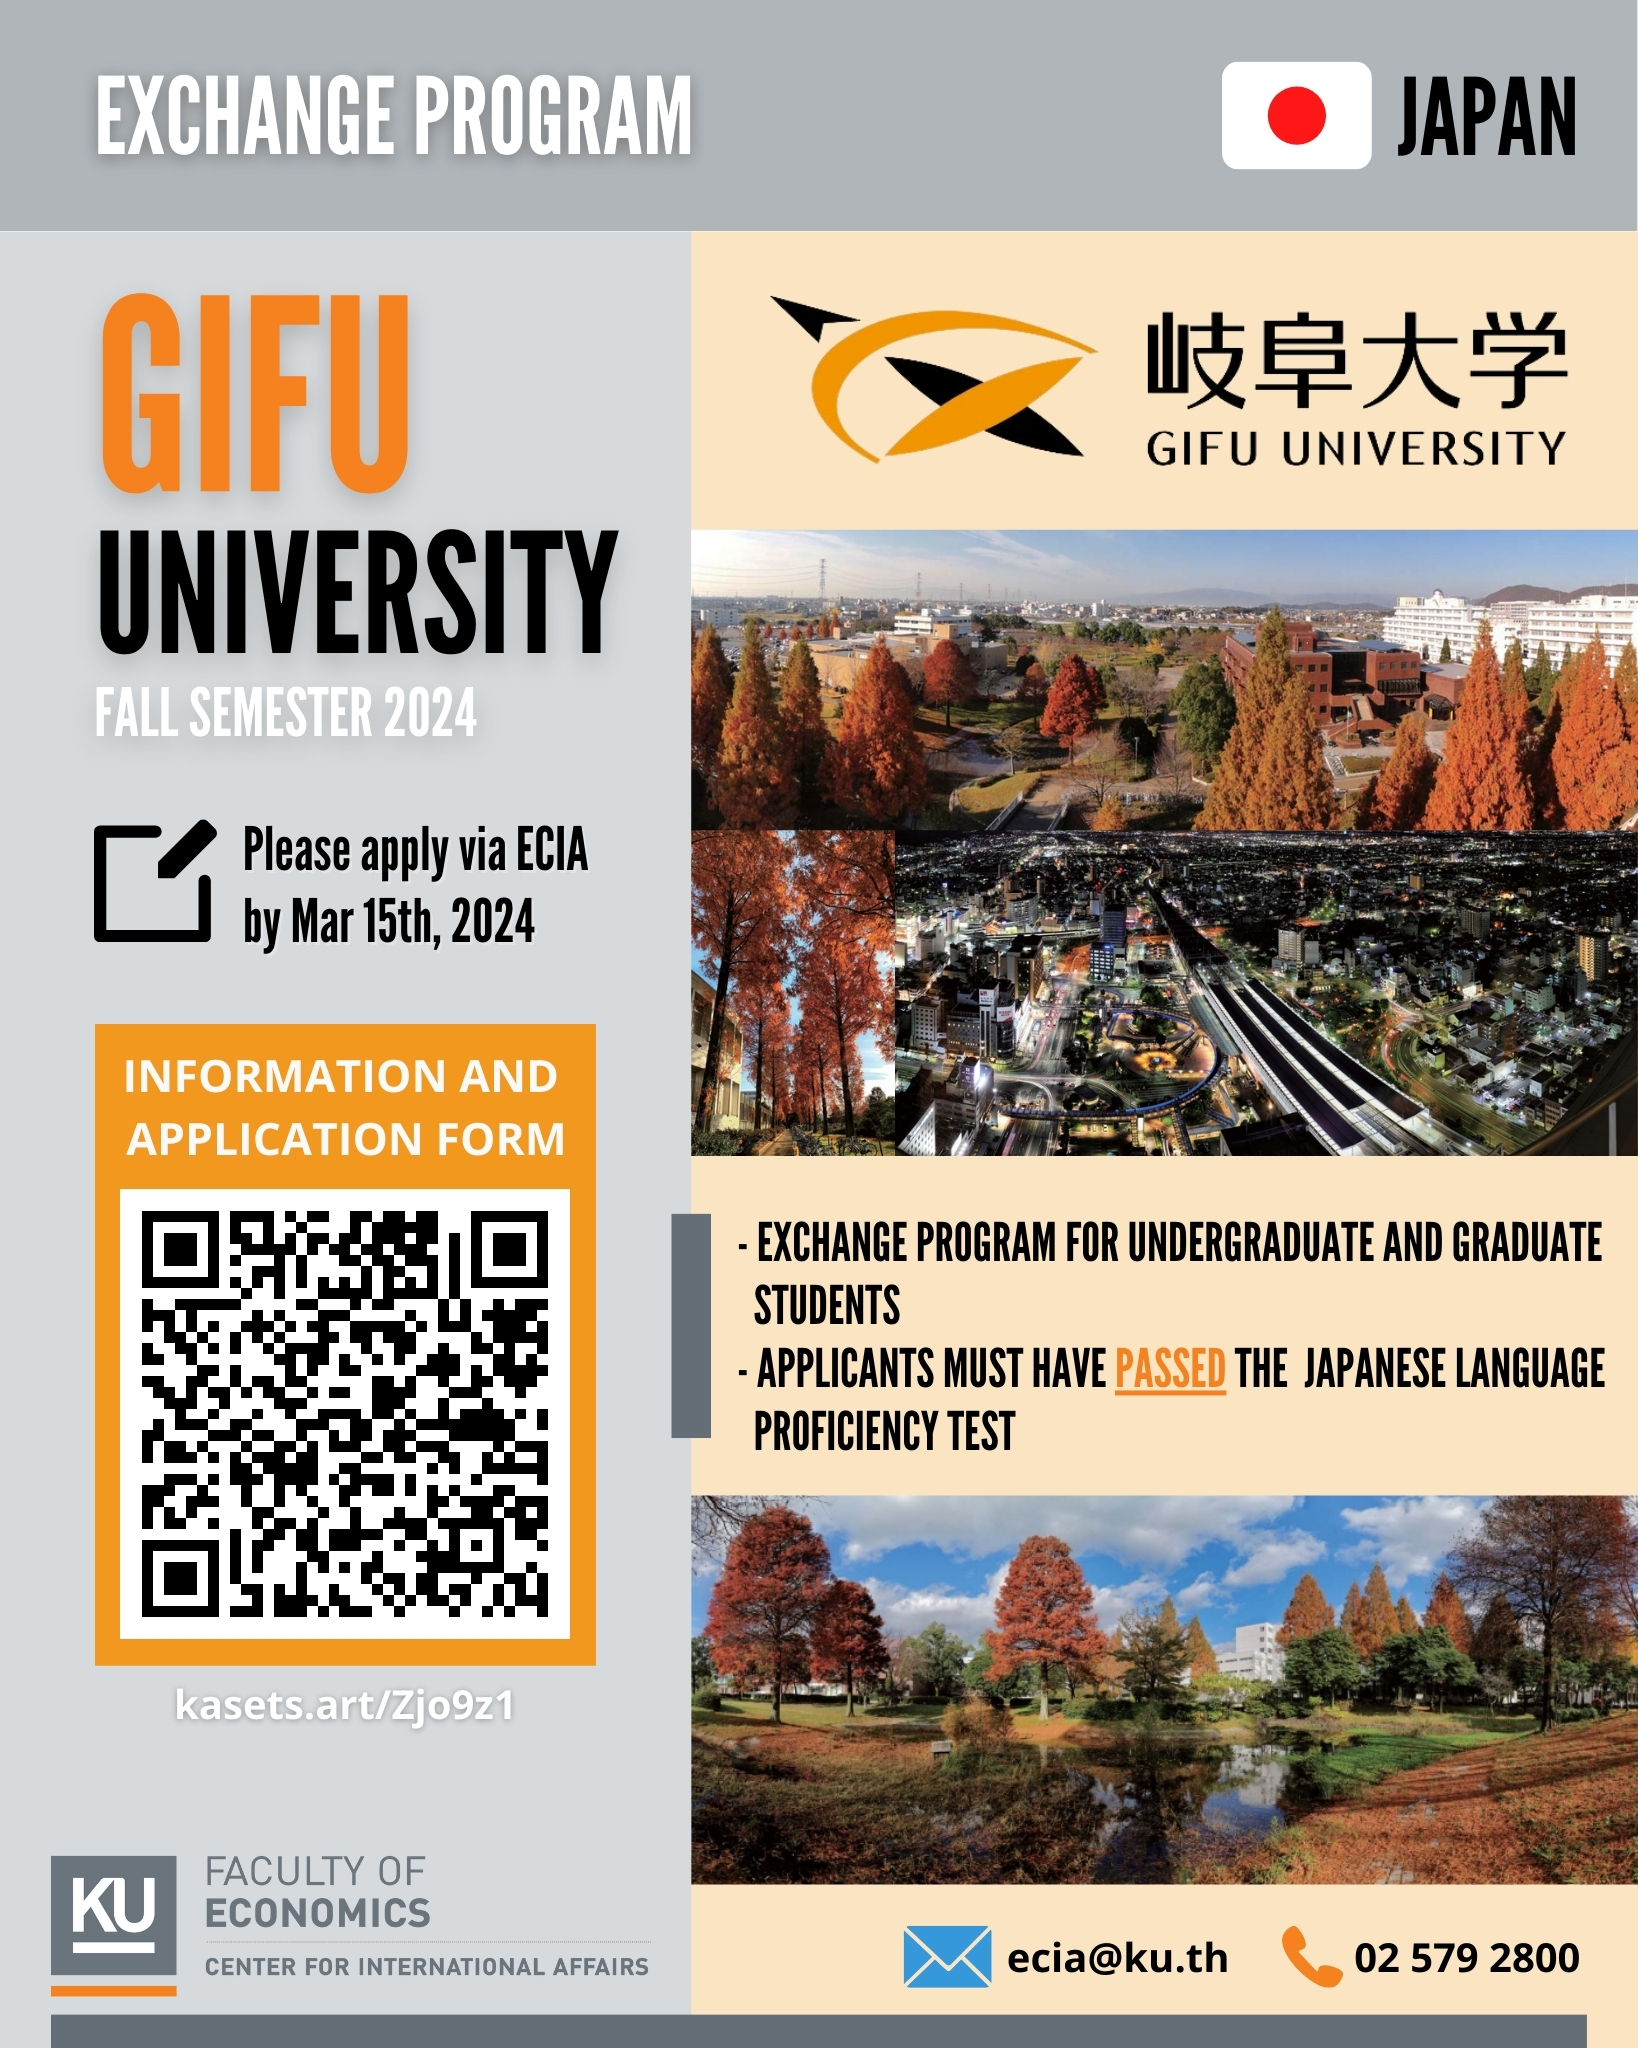 Exchange Program at GIFU University, JAPAN in Fall Semester 2024